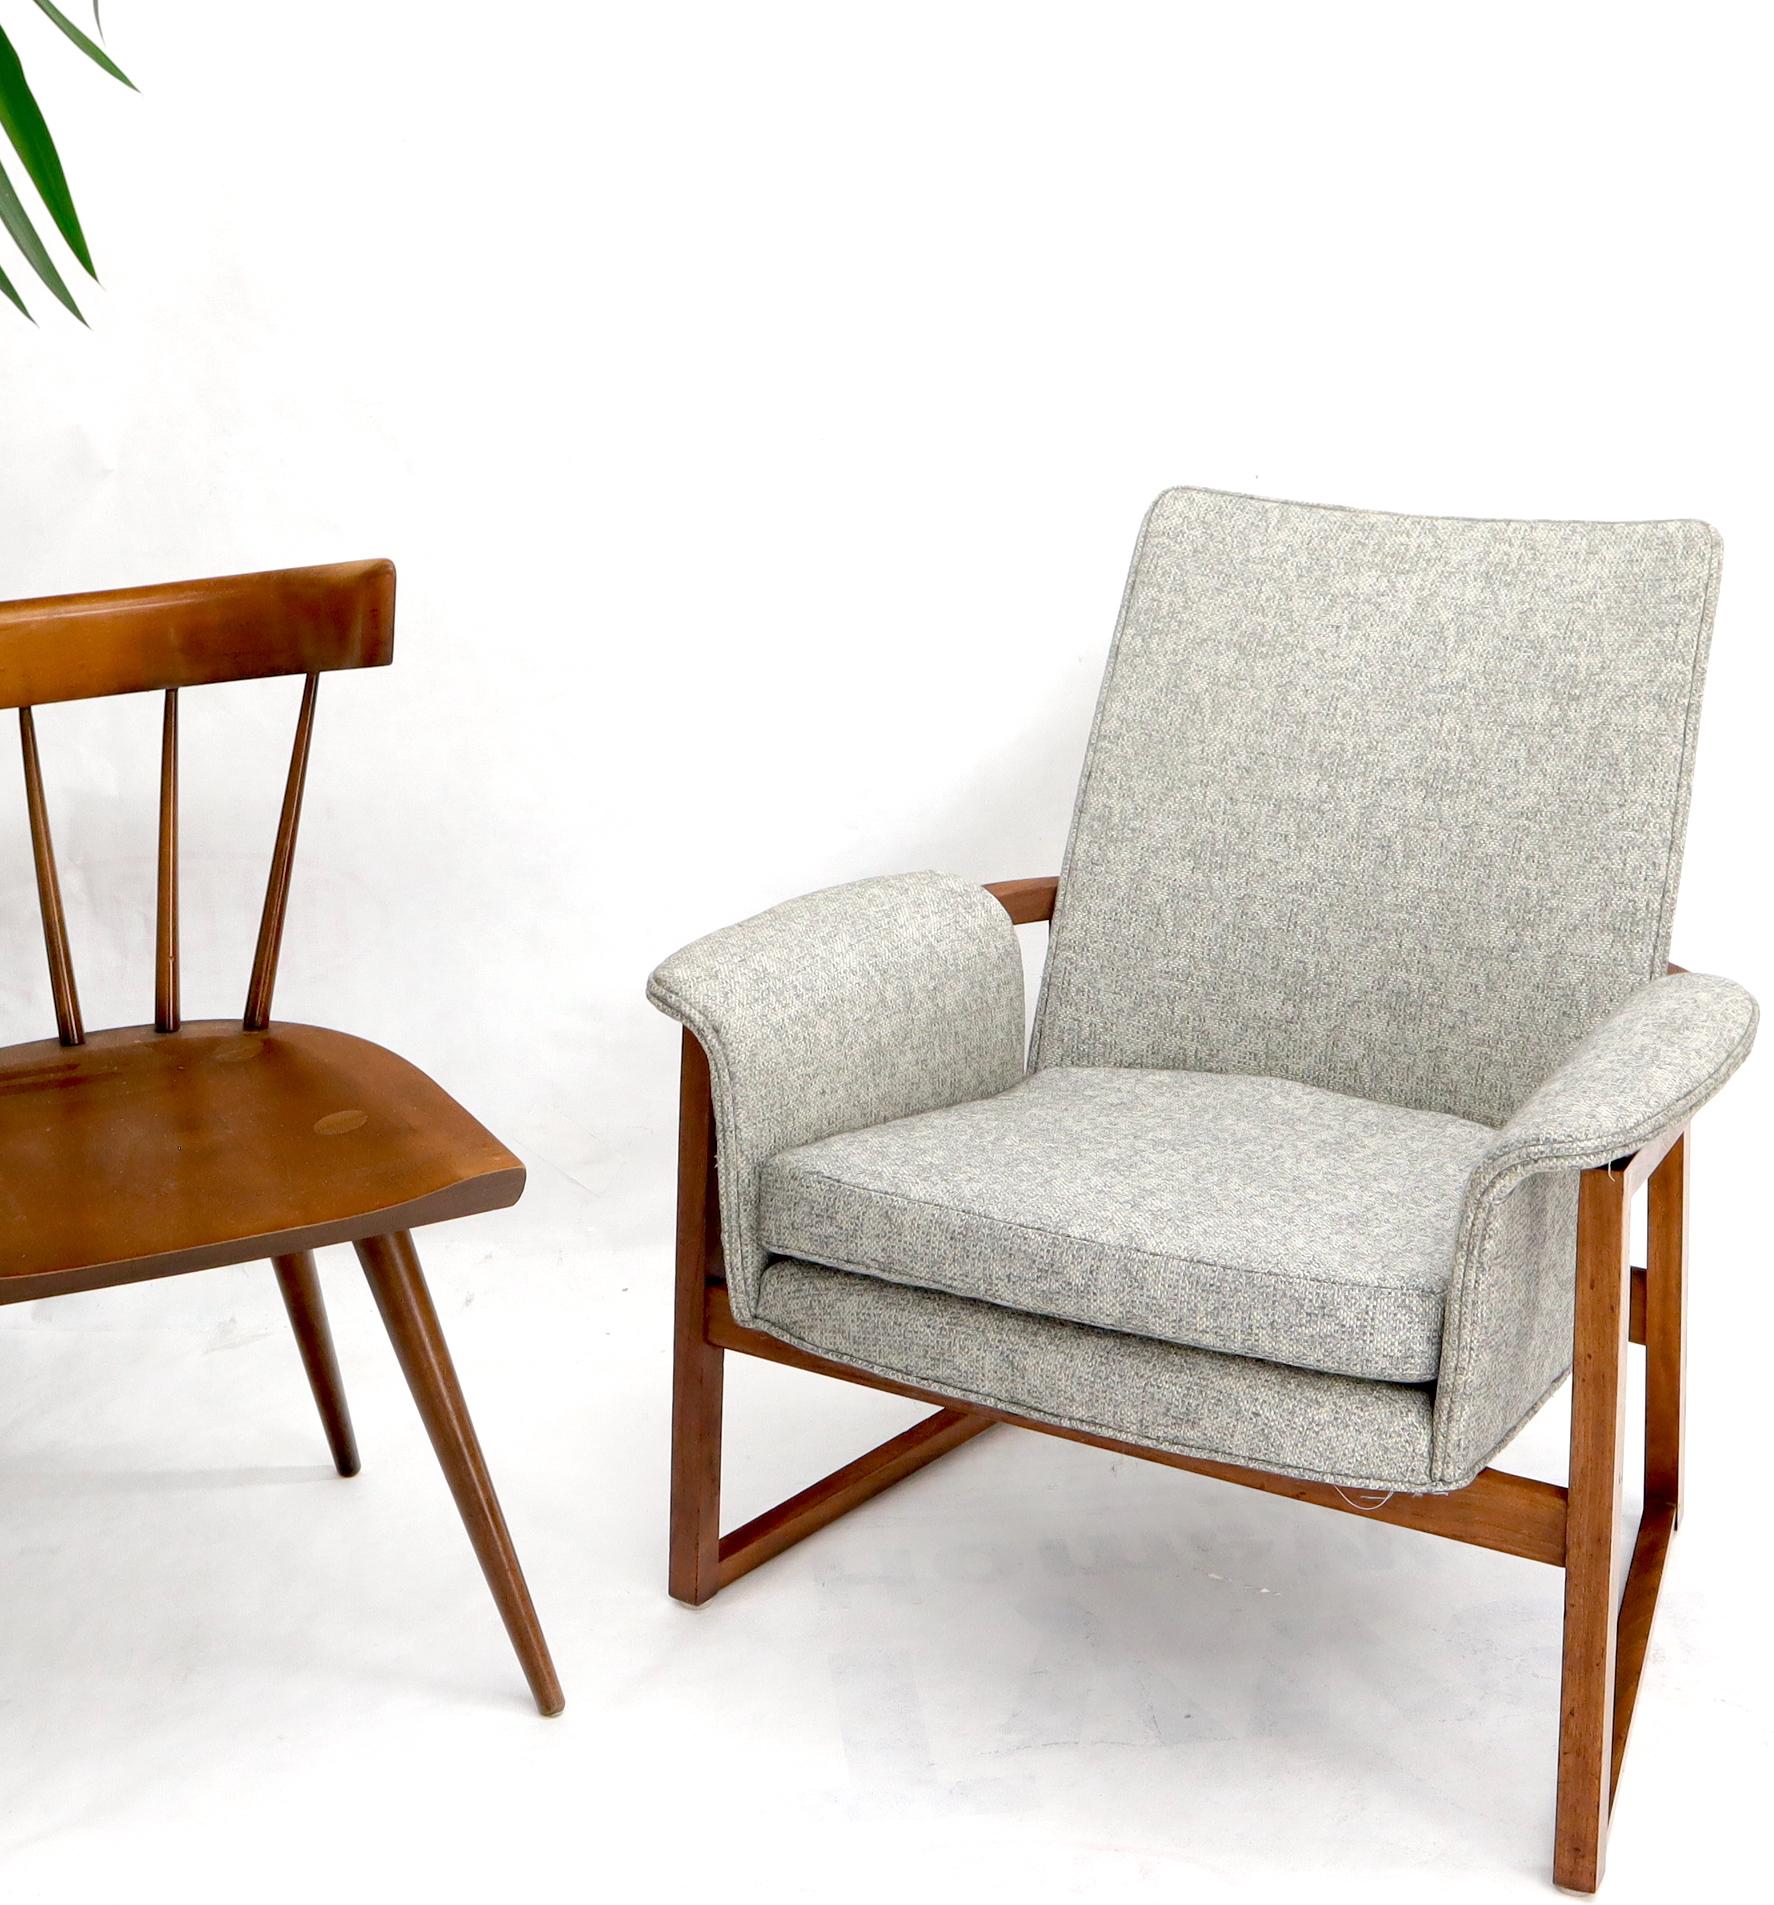 Danish Mid-Century Modern teak barrel shape lounge chair newly upholstered in basket weave silver tone fabric. Similar or shared design lines of wraparound teak frame of by Kofod-Larsen Elizabeth chair.